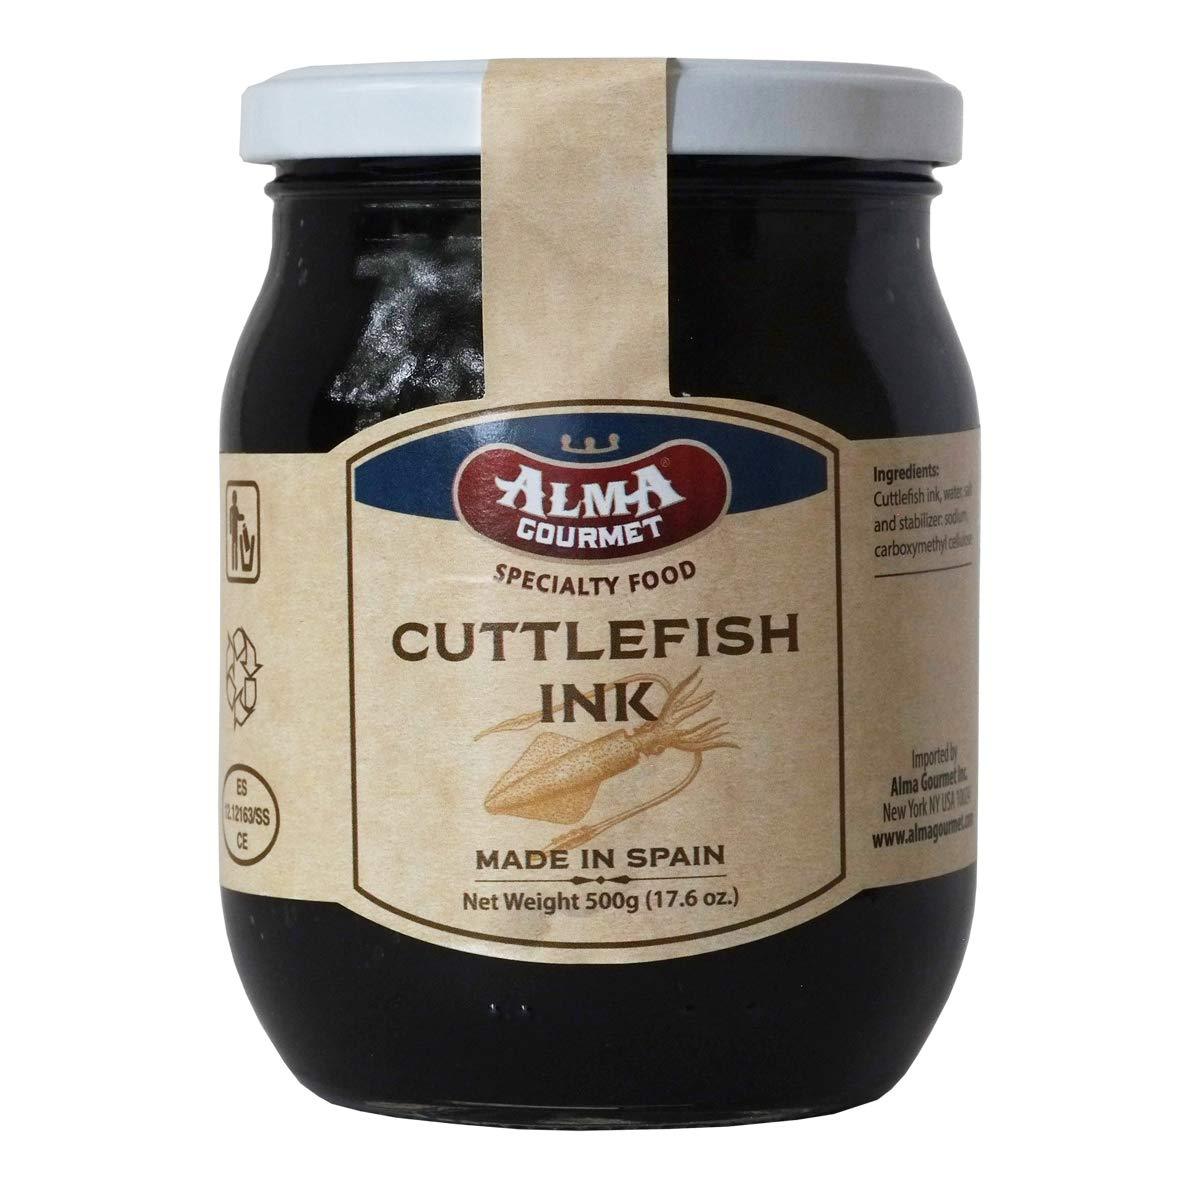 Alma Gourmet Cuttlefish Ink Jar 500g - reddotgreendot